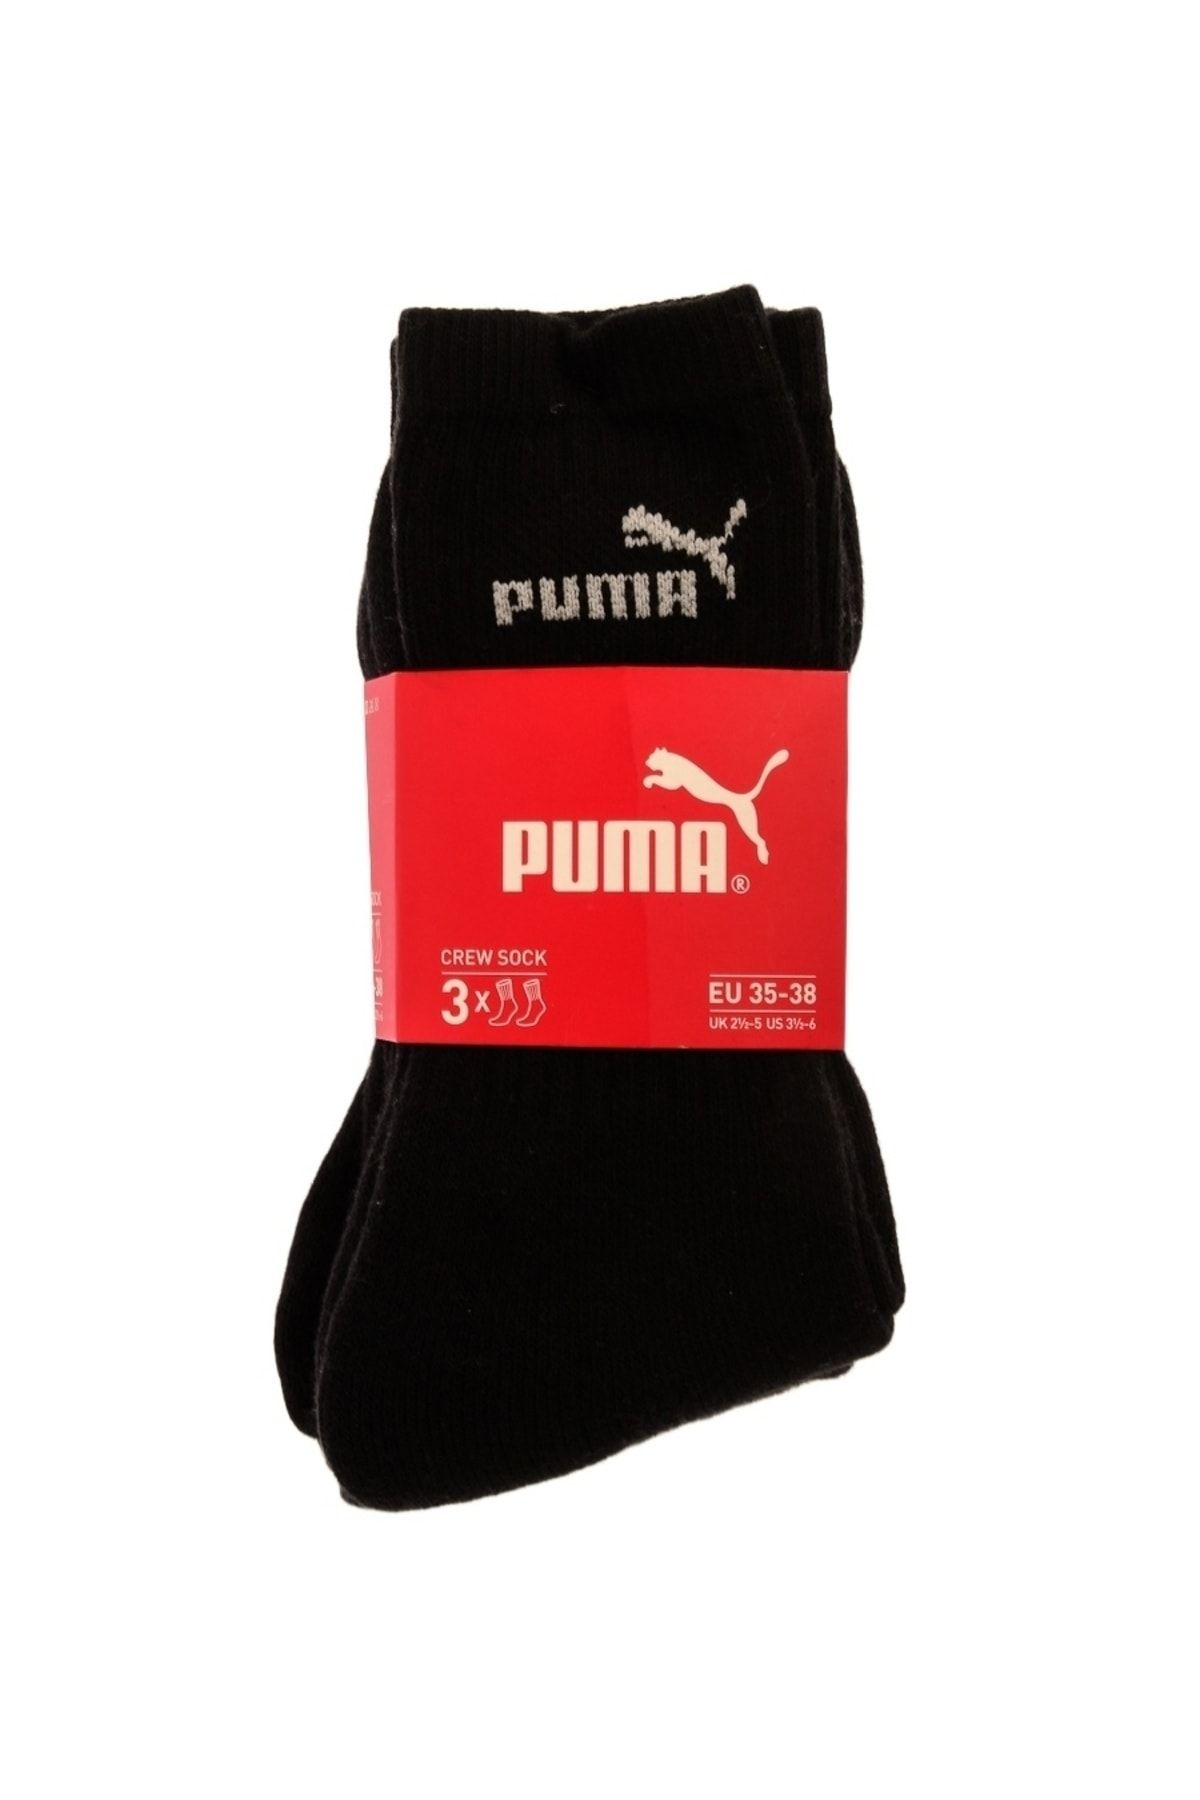 Puma Siyah Unisex Spor Çorap 88329601